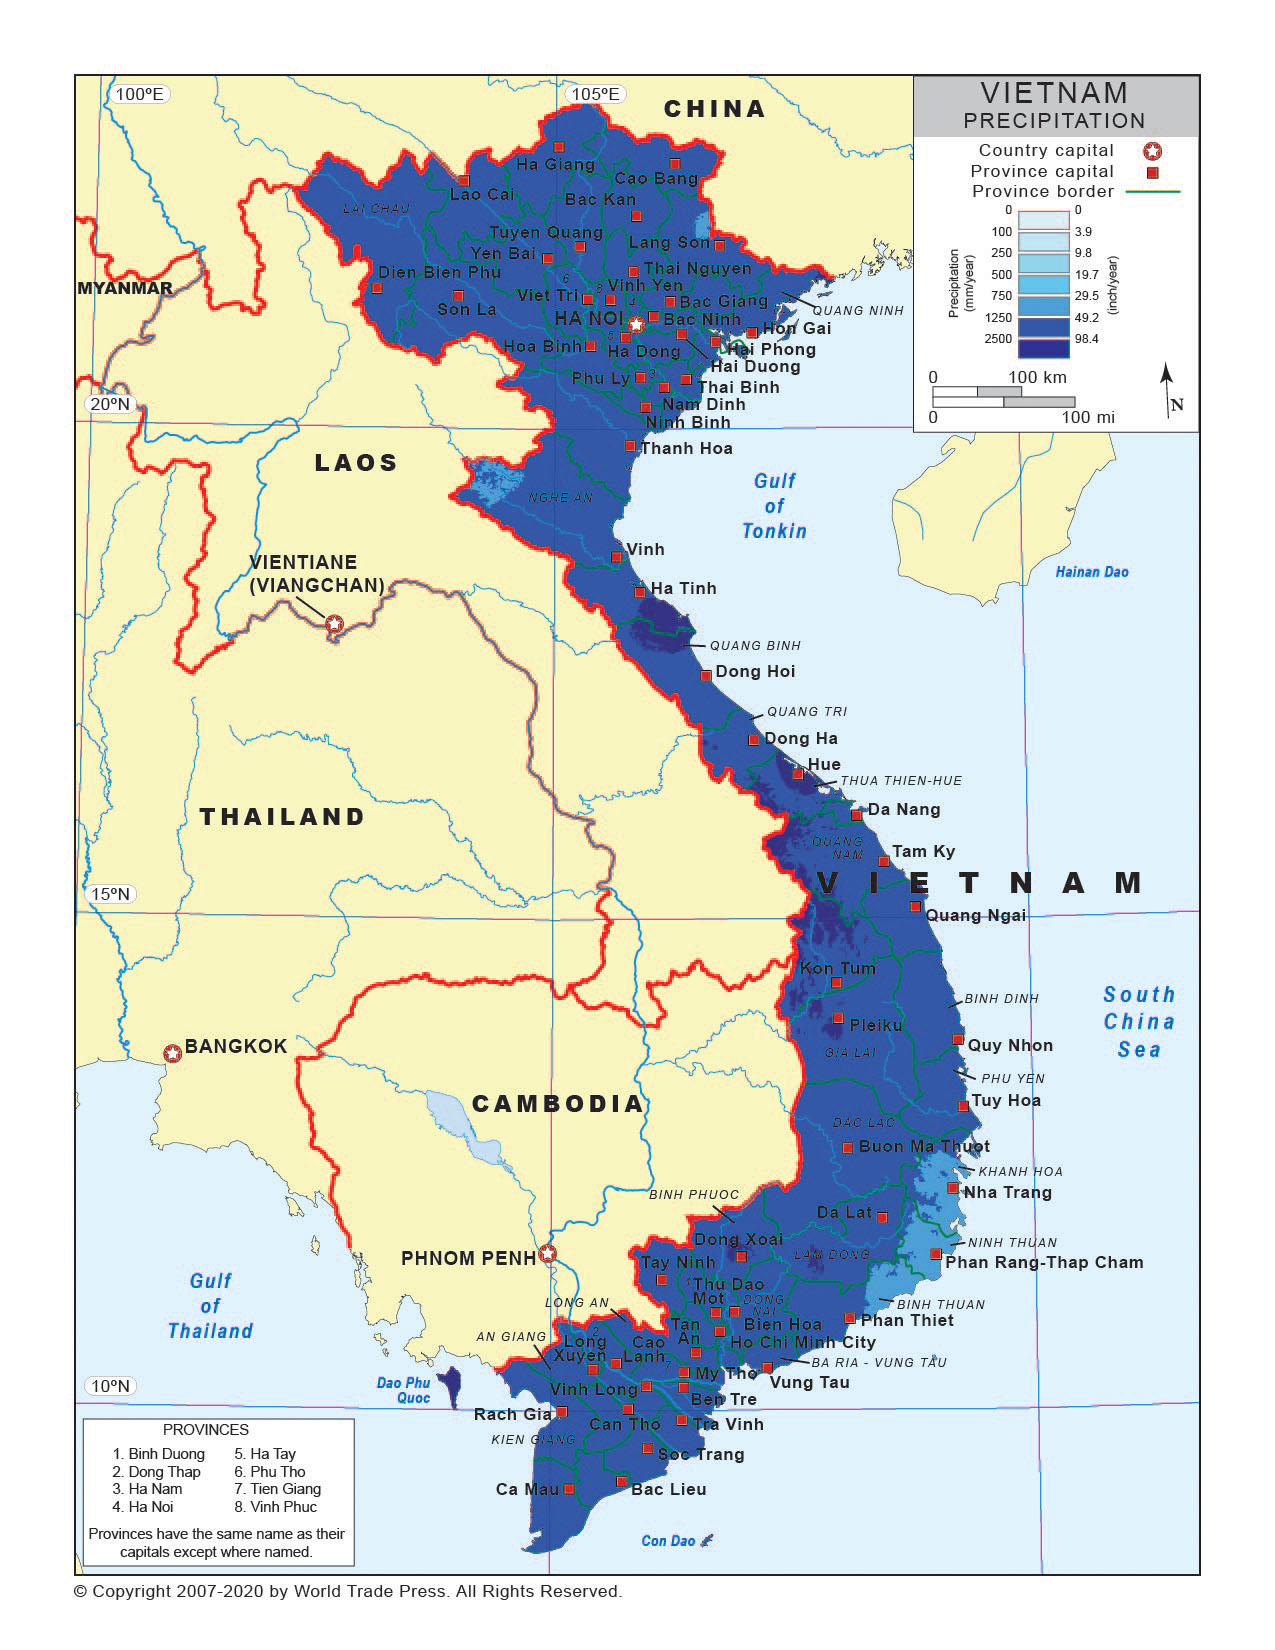 Precipitation Map of Vietnam